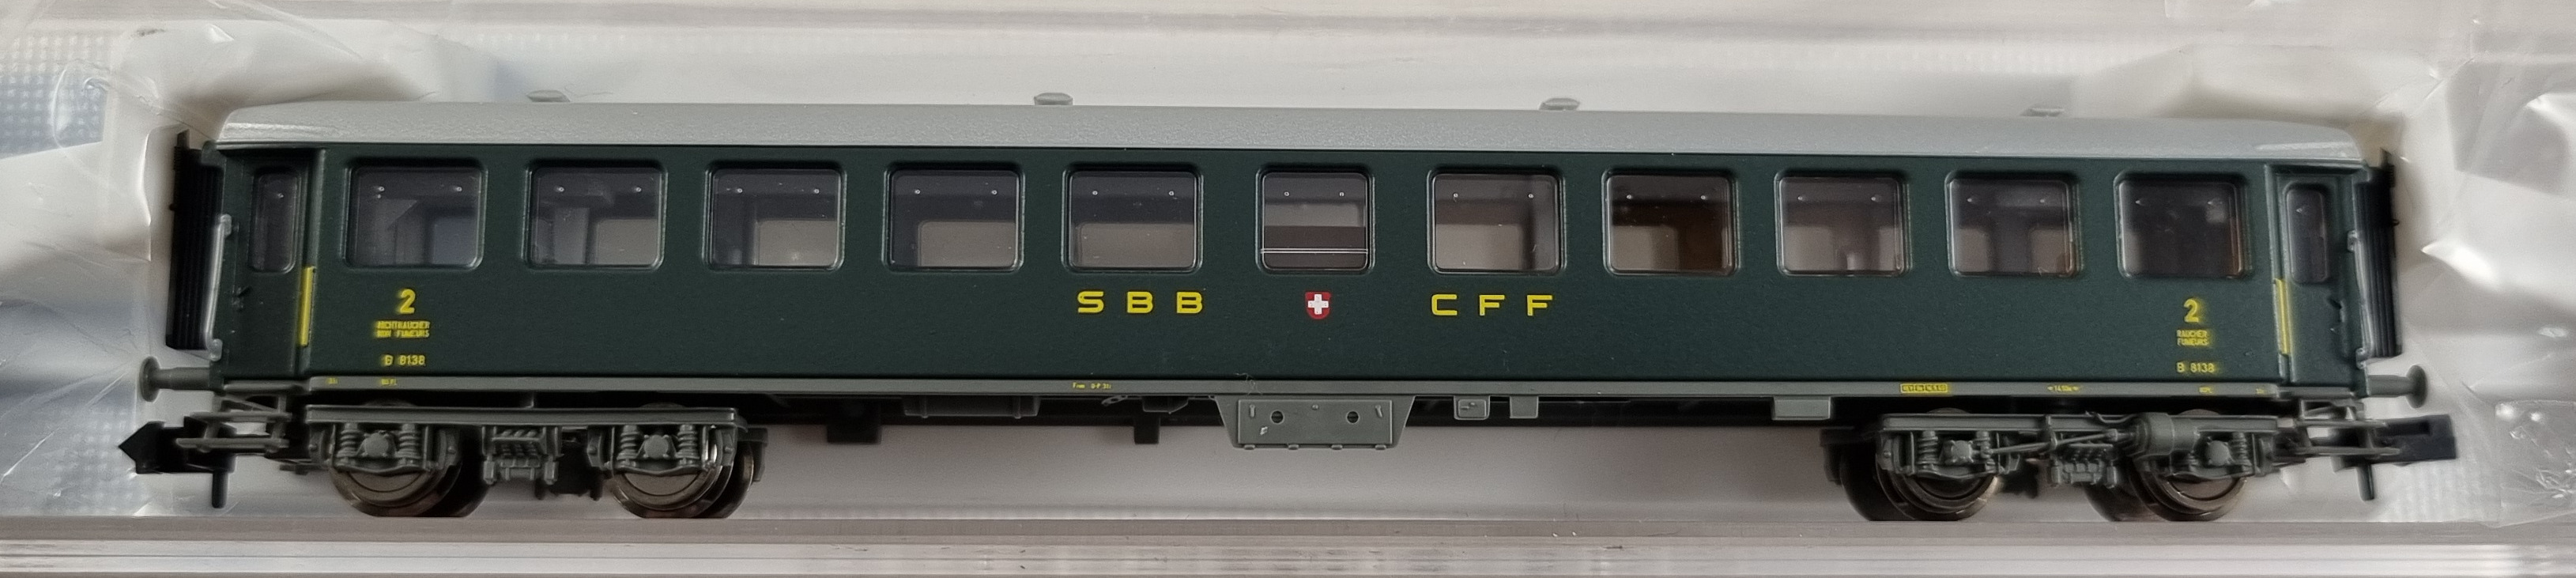 Fleischmann 813909, SBB personvagn, Skala N, SH 767-14, N6